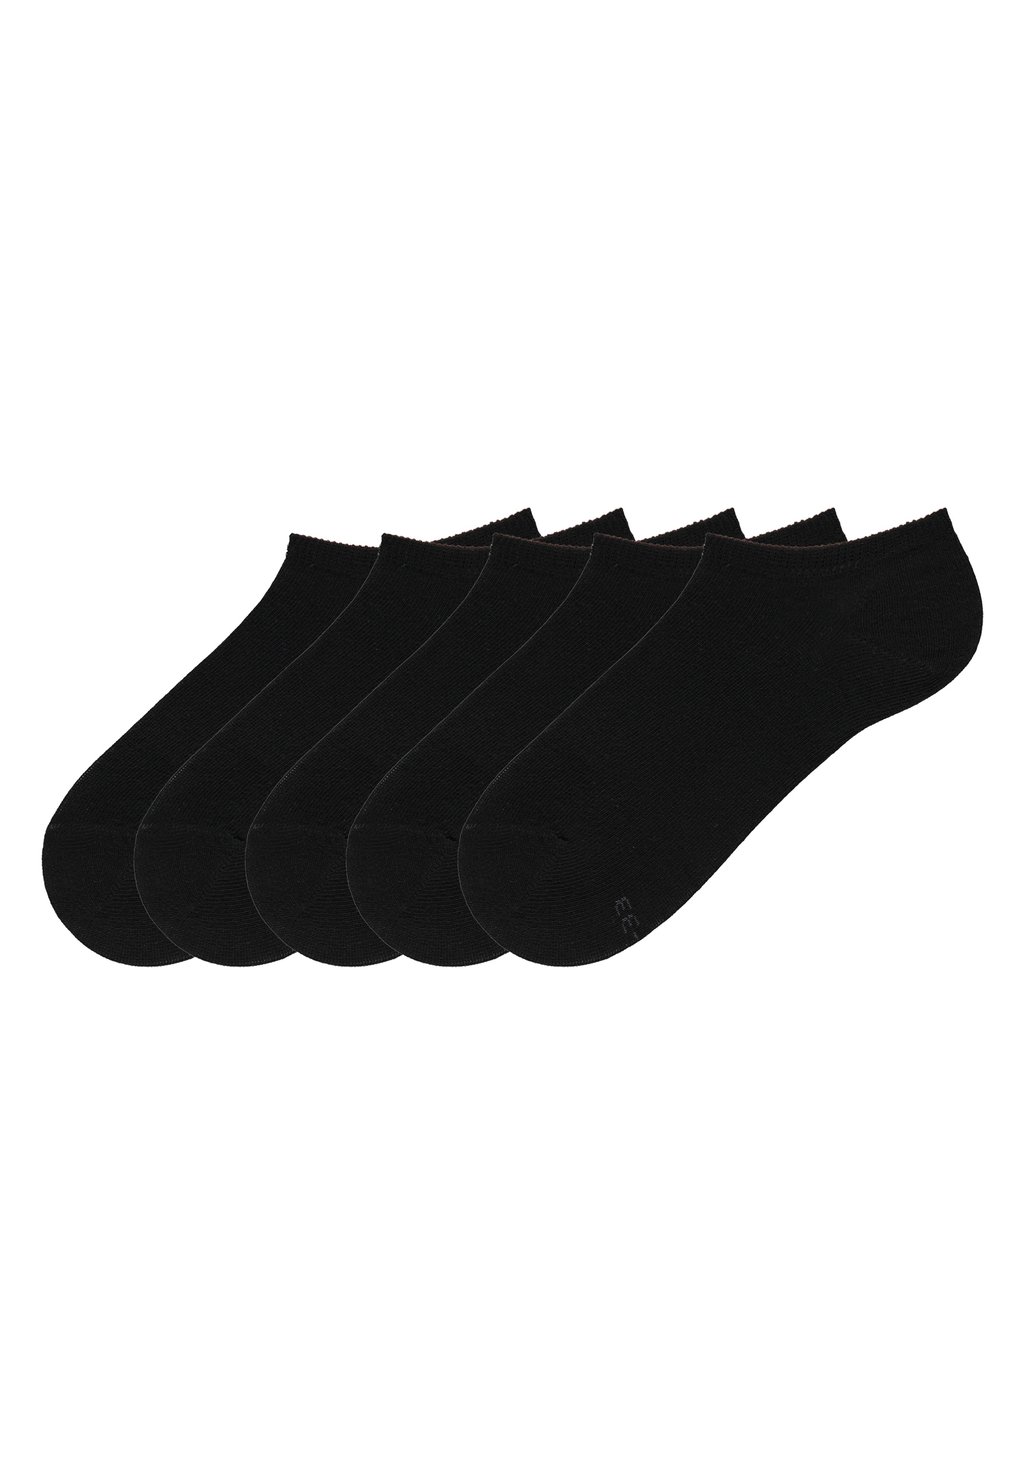 Носки Tezenis, черный носки unisex tezenis черный металлик